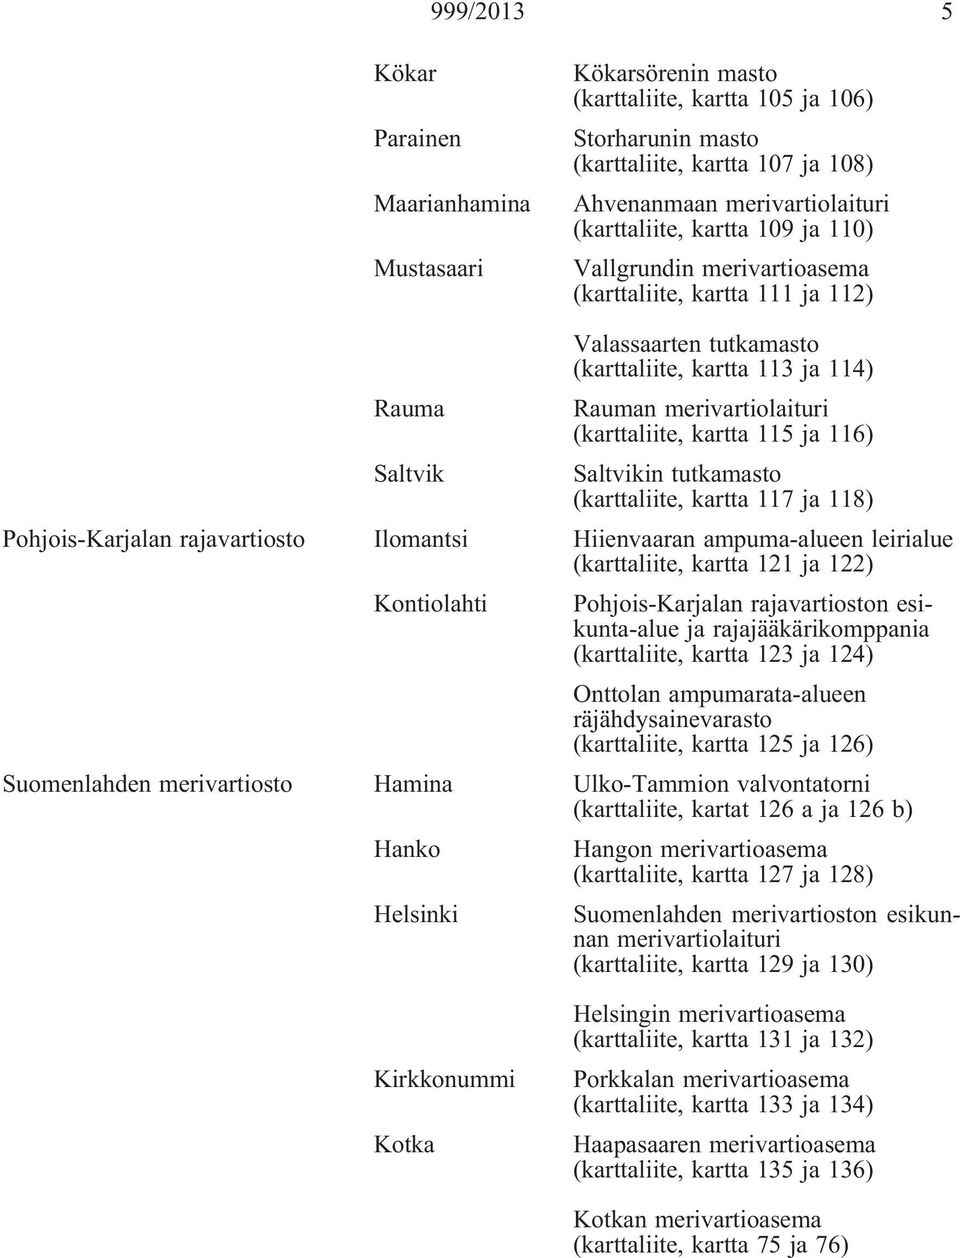 114) Rauman merivartiolaituri (karttaliite, kartta 115 ja 116) Saltvikin tutkamasto (karttaliite, kartta 117 ja 118) Hiienvaaran ampuma-alueen leirialue (karttaliite, kartta 121 ja 122)